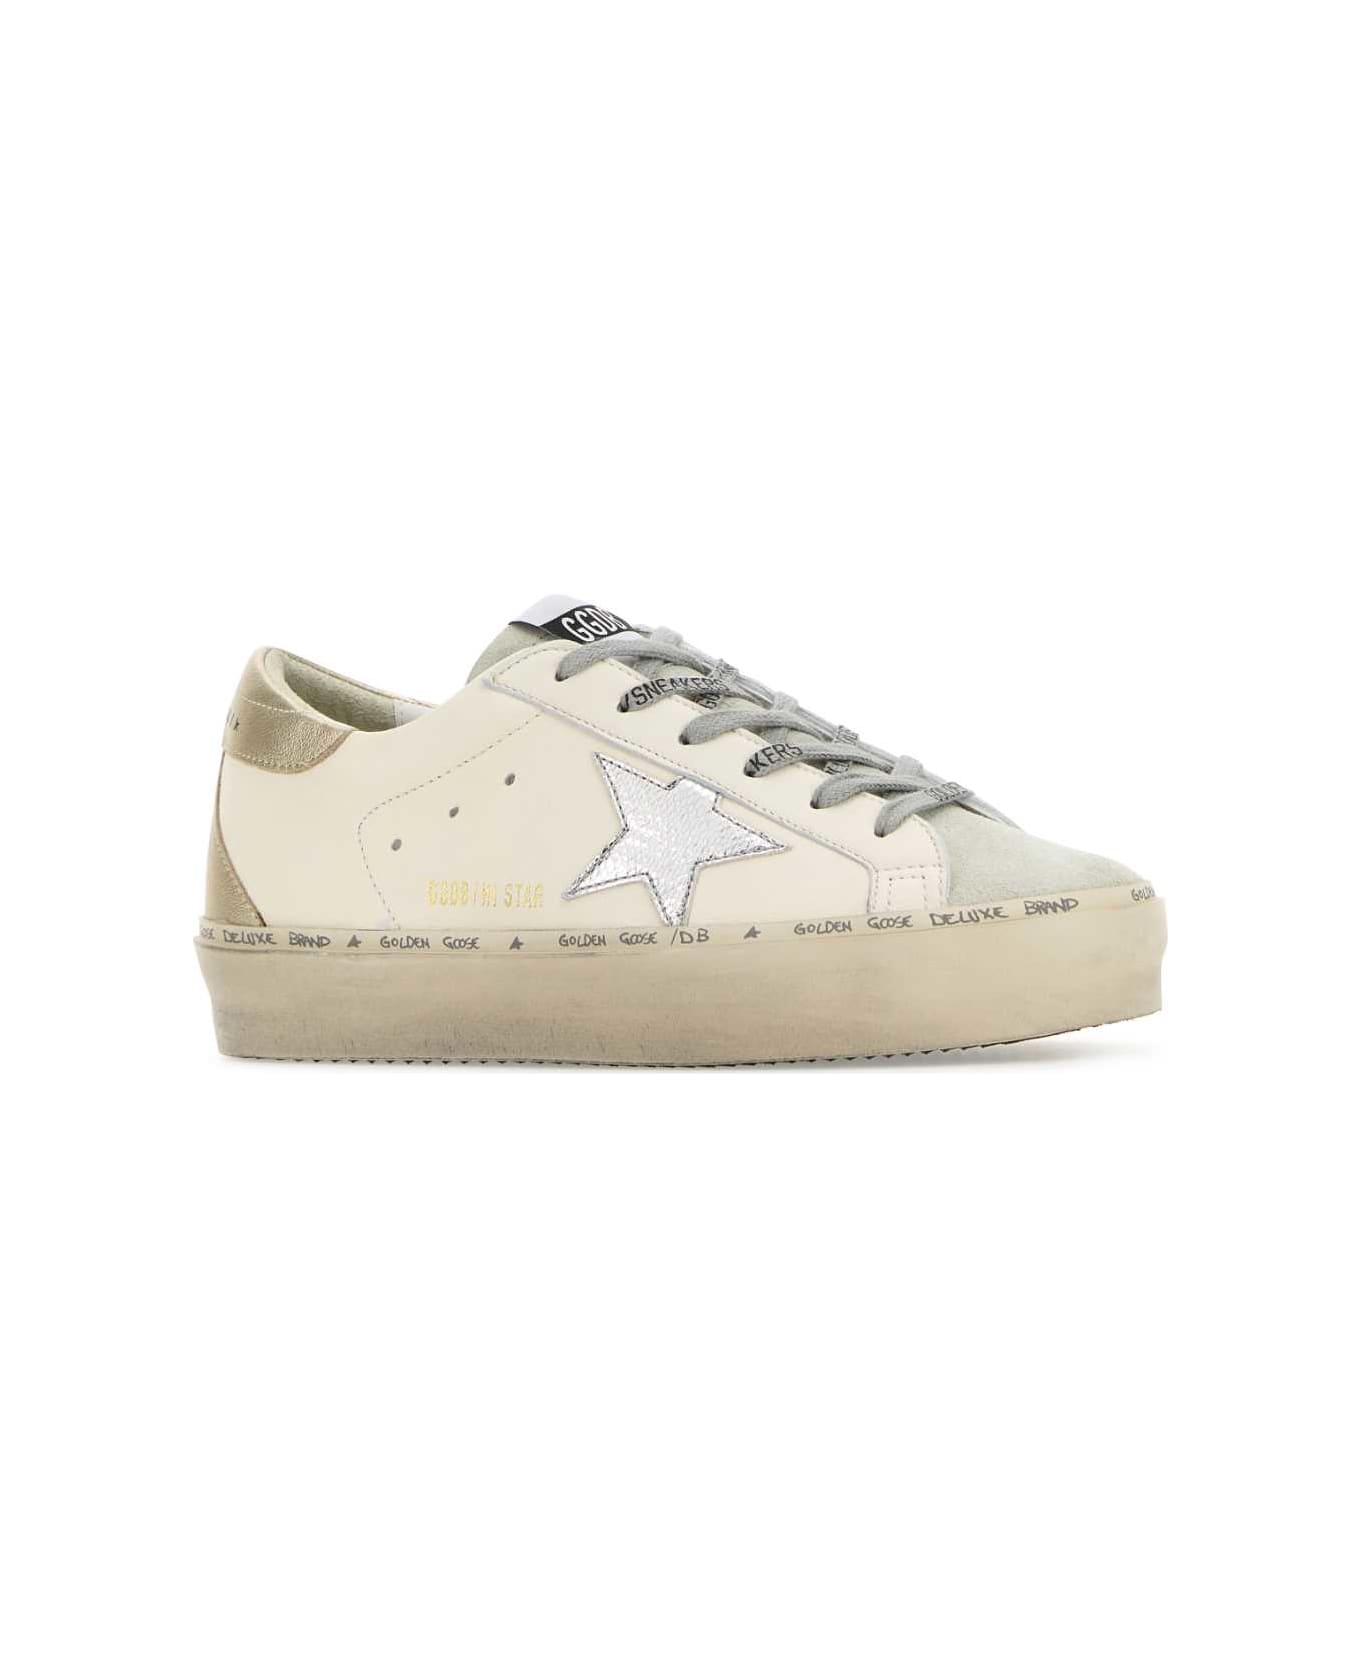 Golden Goose White Leather Hi Star Sneakers - WHITEICESILVERPLATINUM